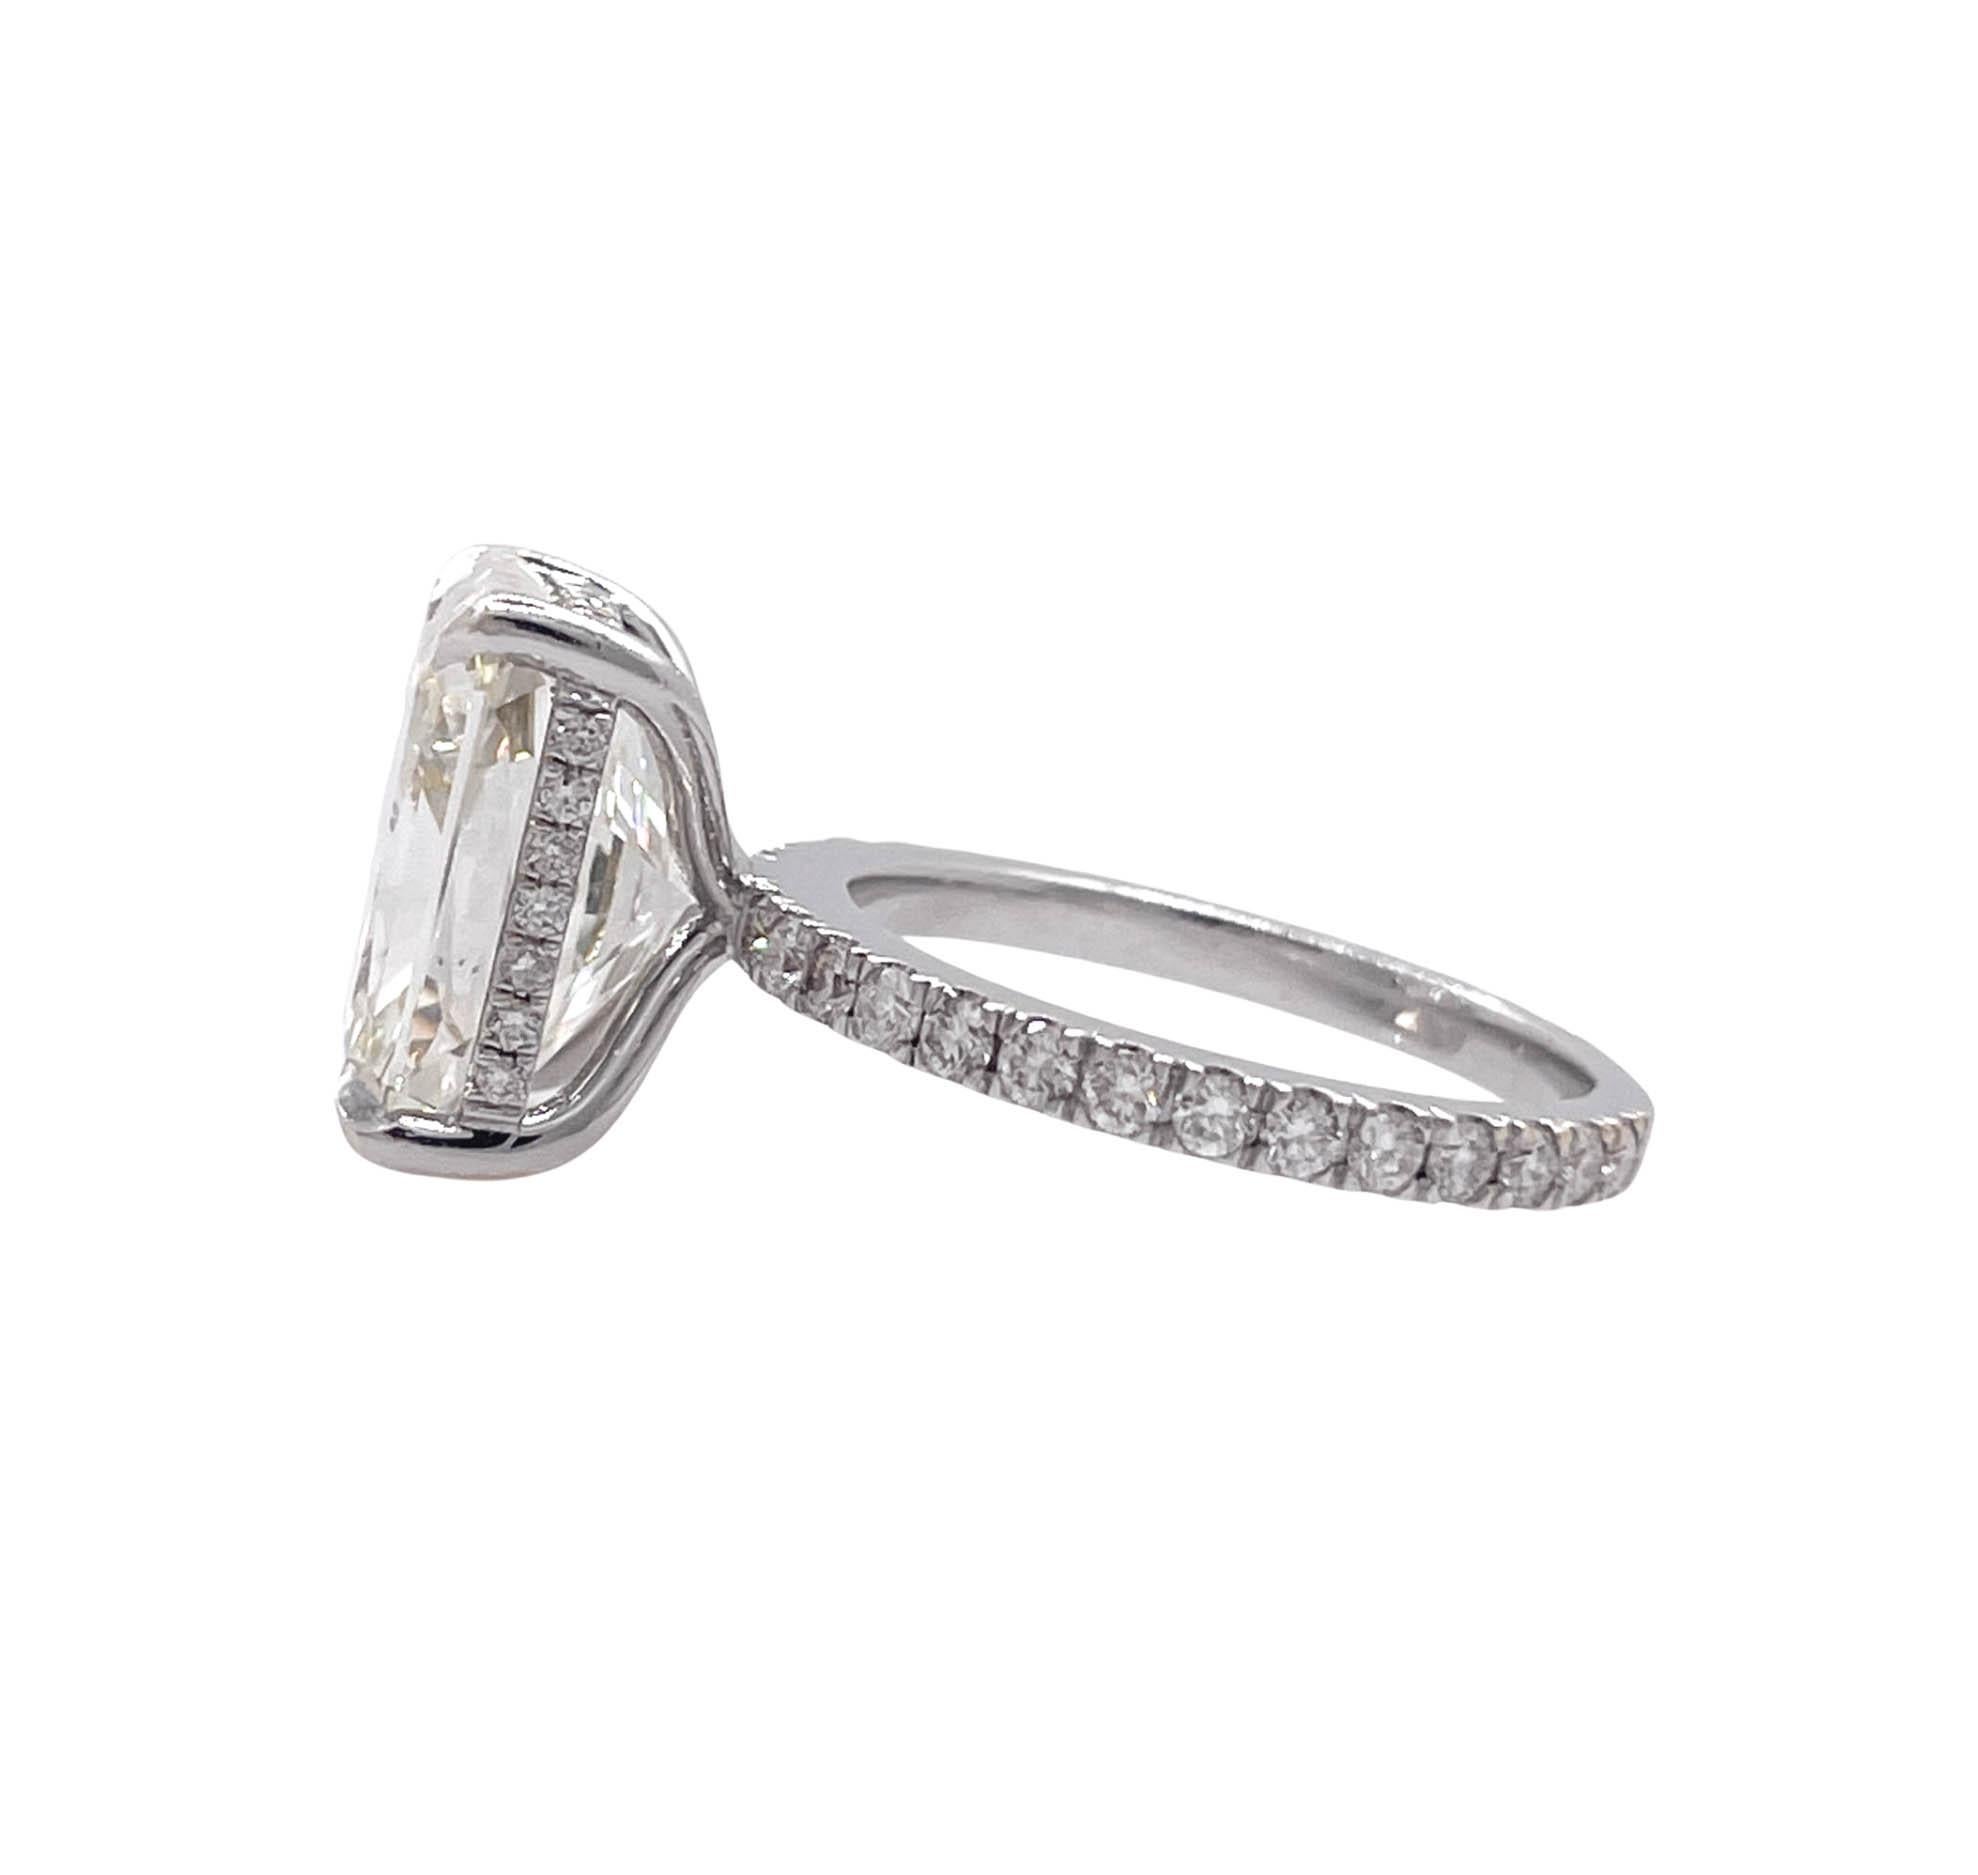 6.08 Carat Radiant Cut Diamond 18k White Gold Solitaire Engagement Wedding Ring 1